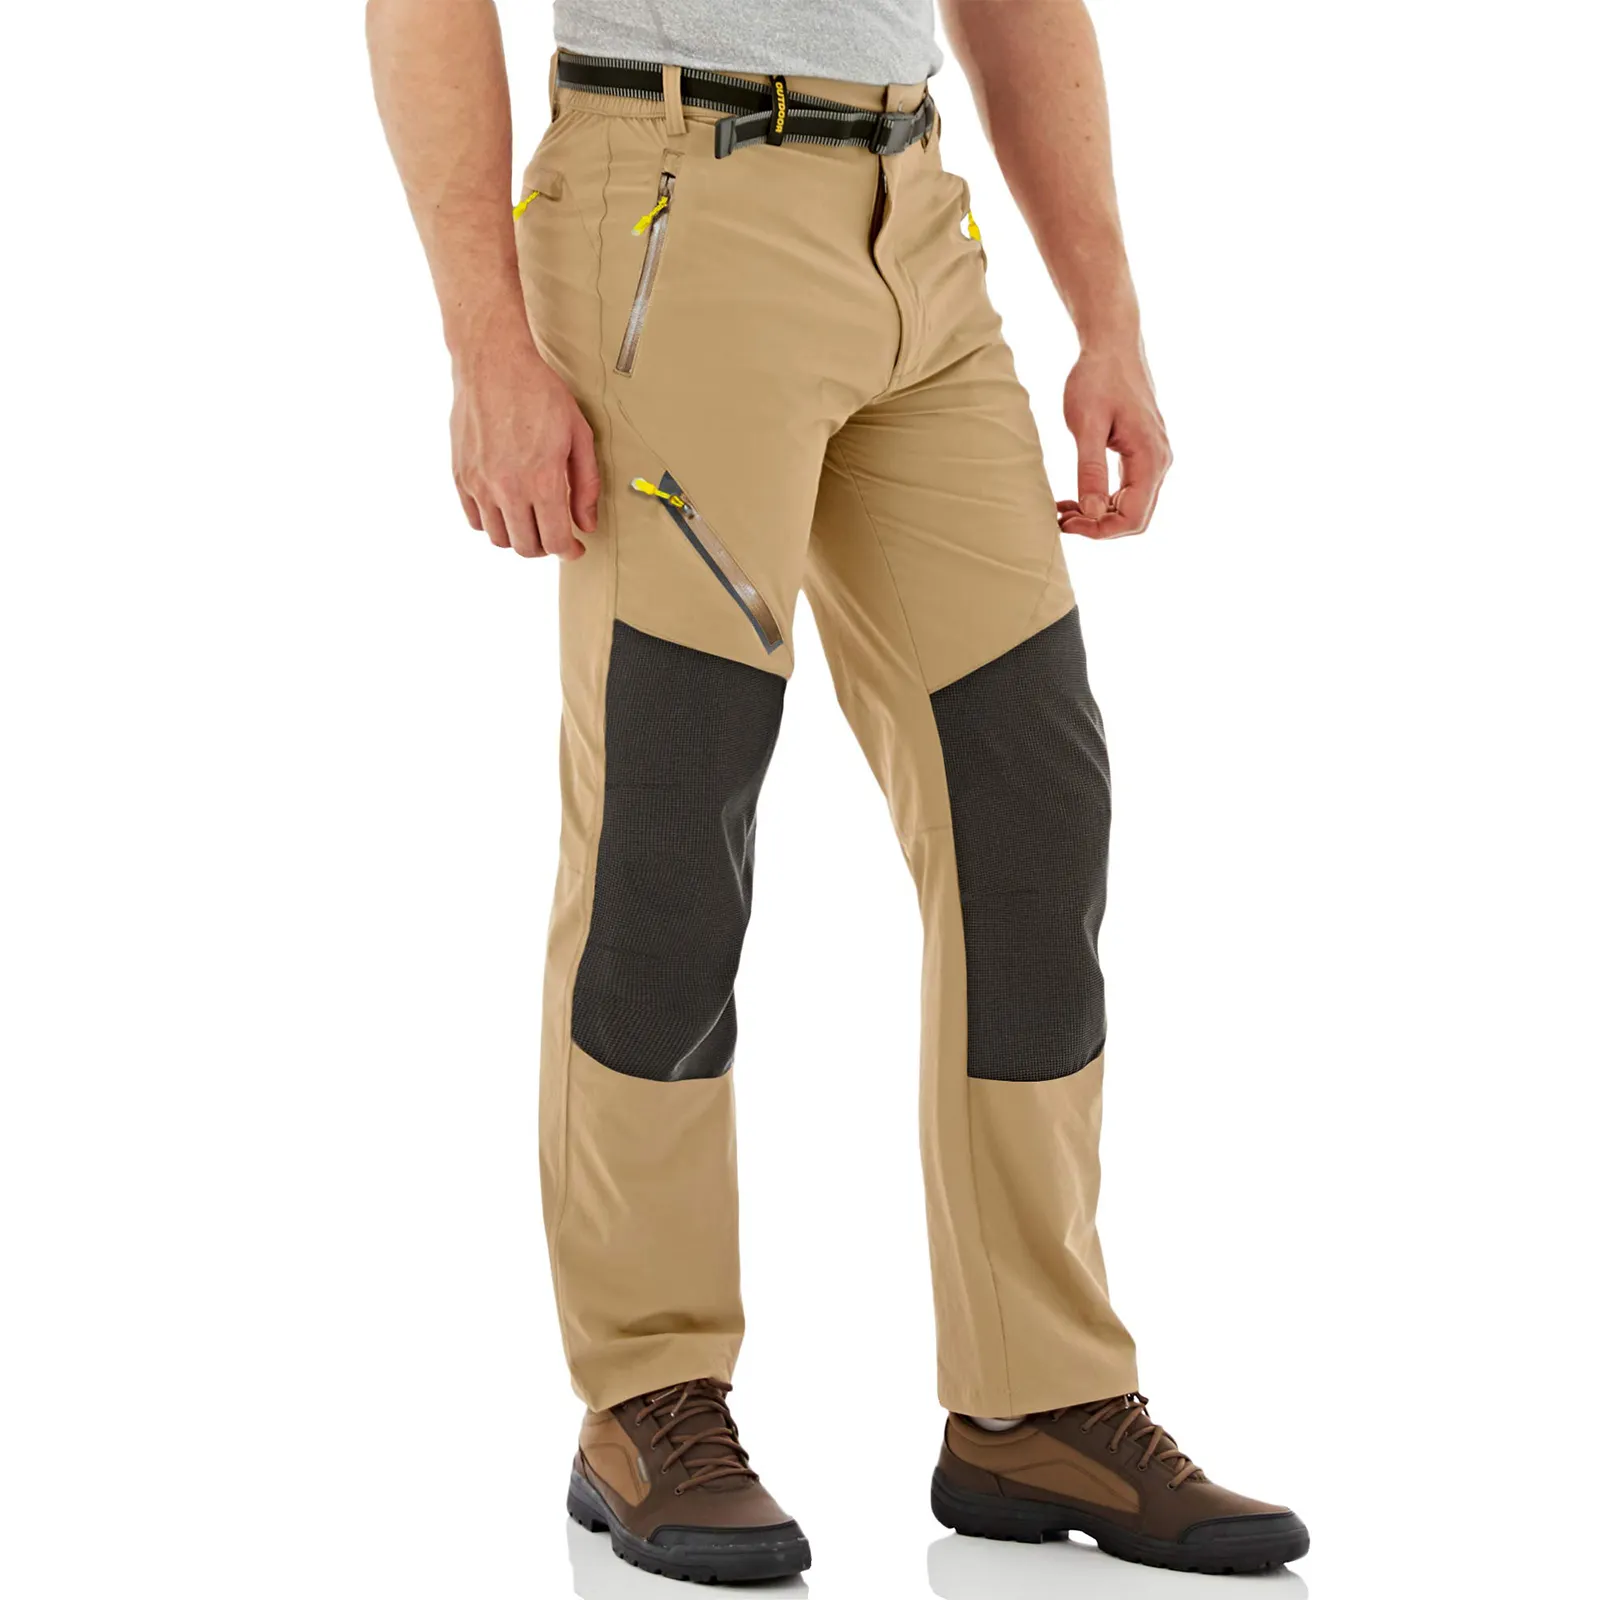 Men's pants tactical mountain pocket zipper pants running pants Hiking Working Climbing Casual